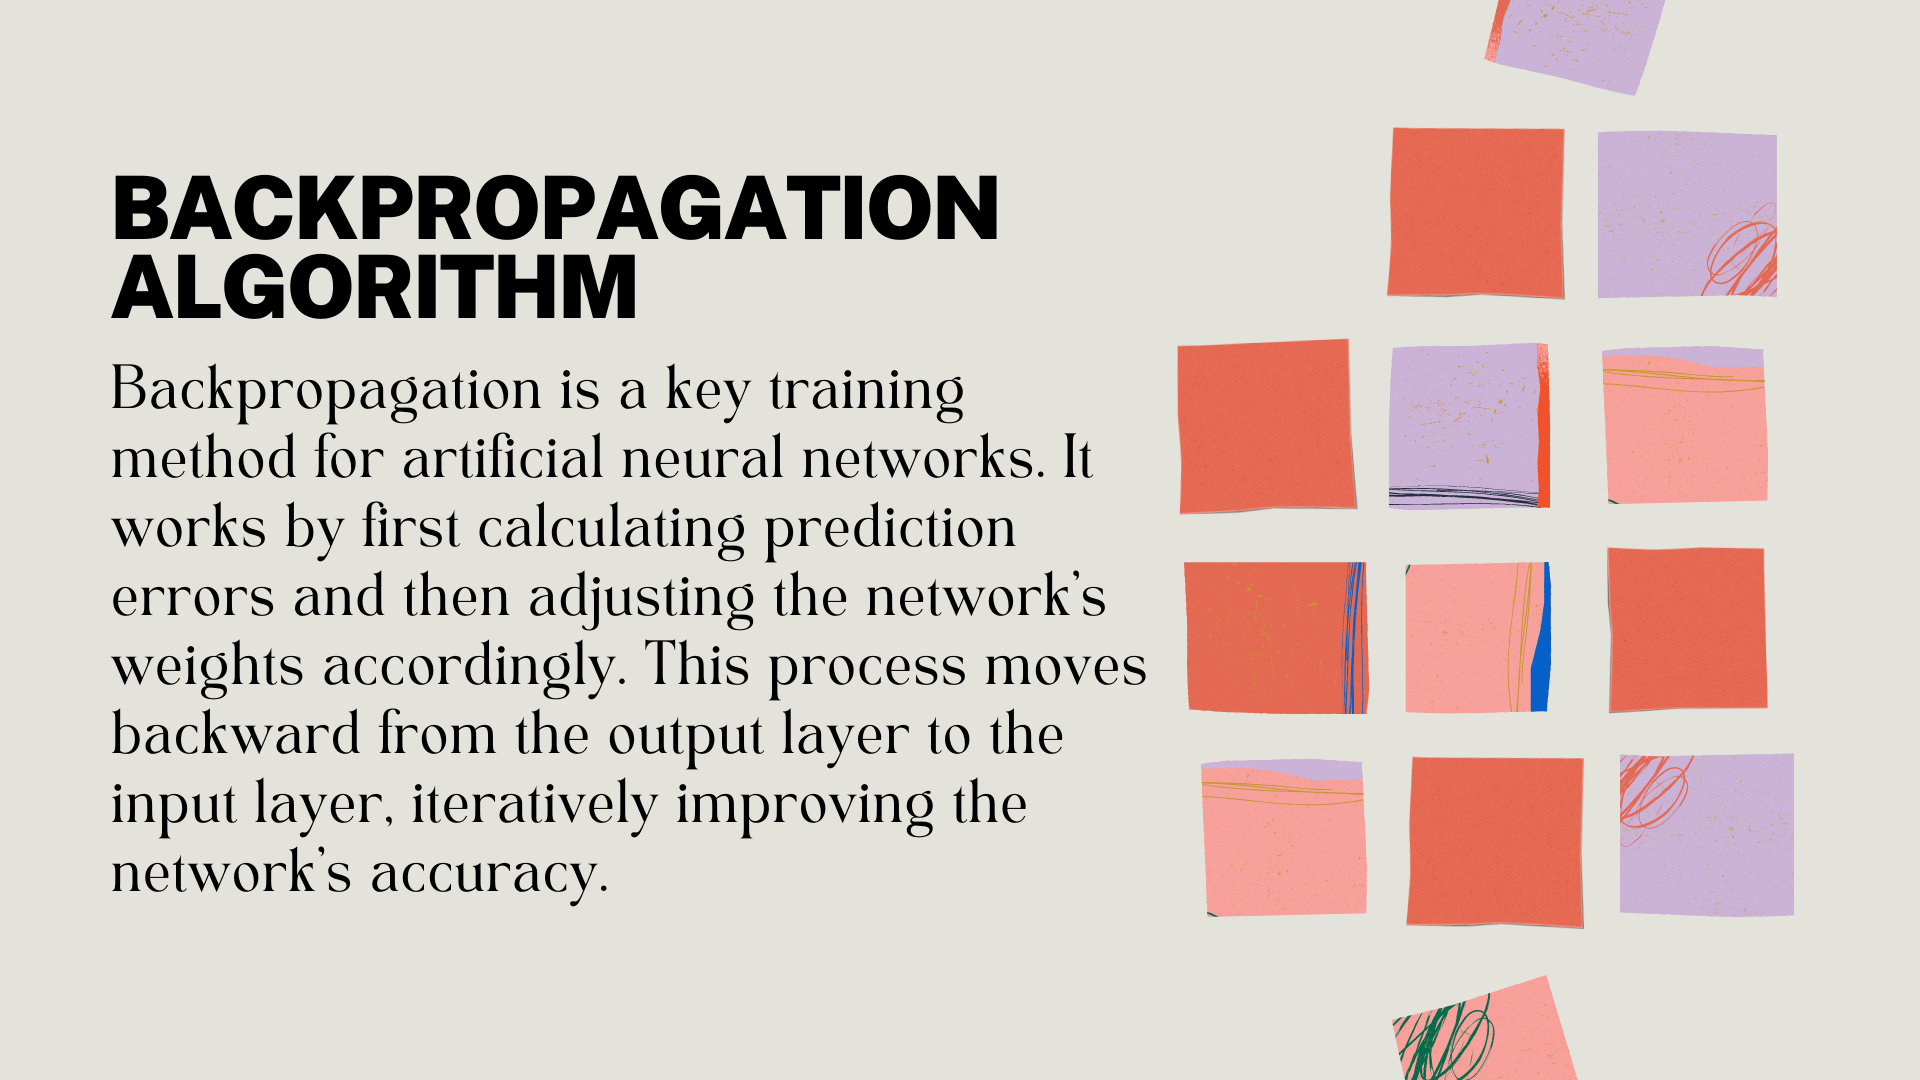 A brief explanation of the Backpropagation Algorithm